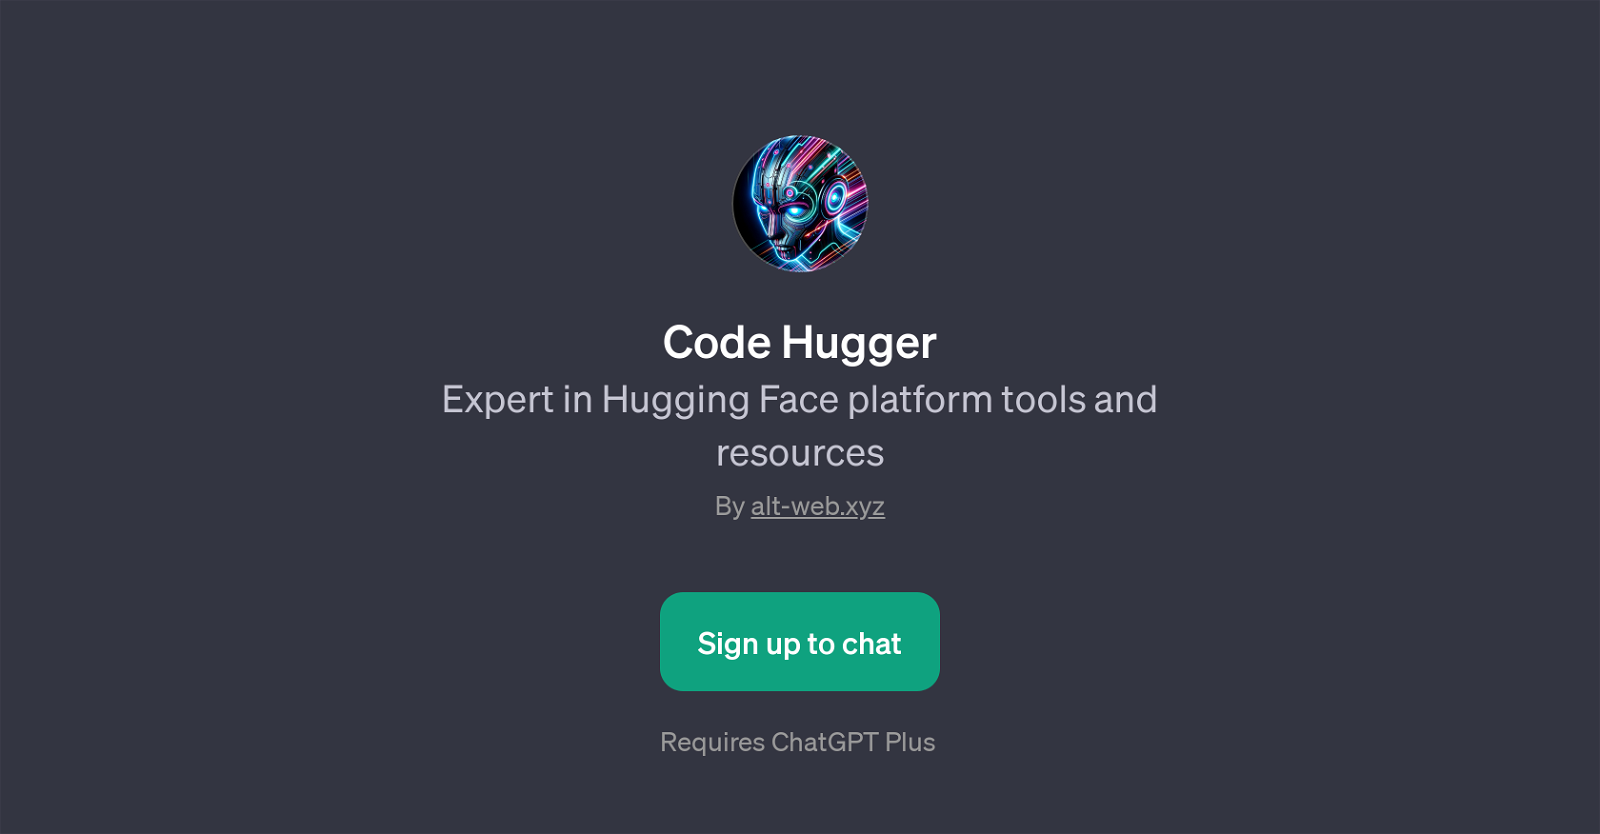 Code Hugger website